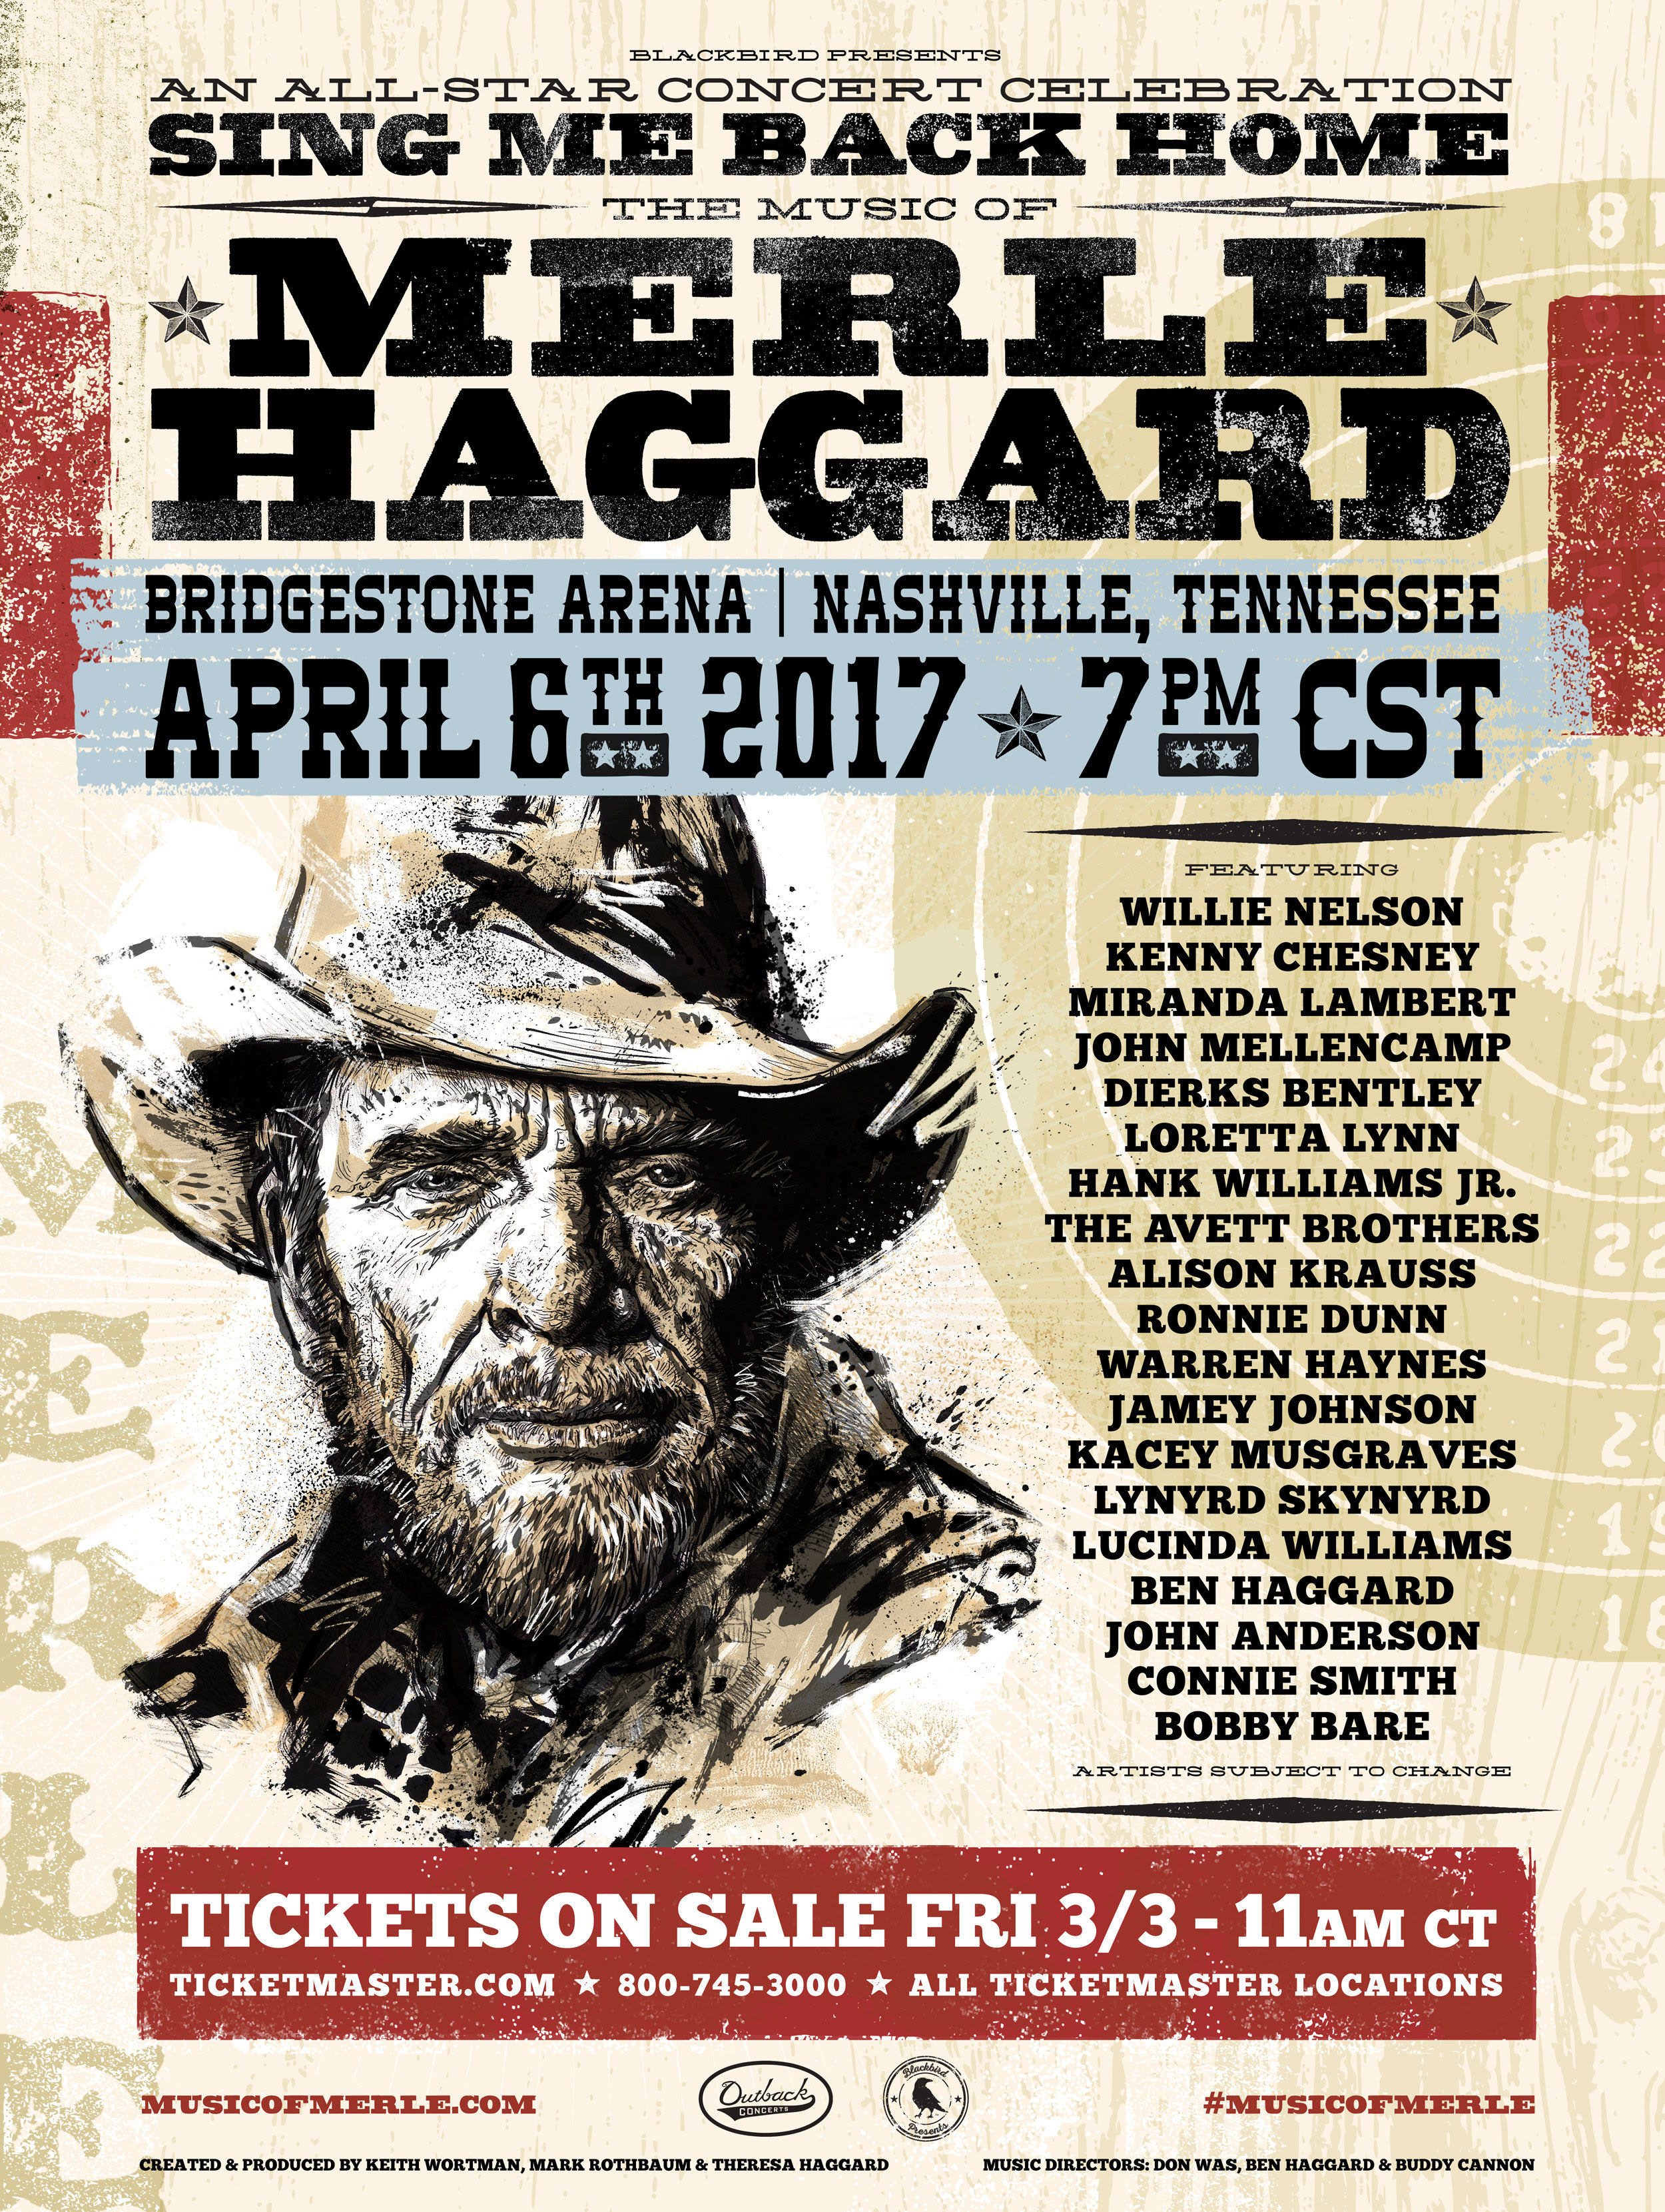 Willie Nelson, Kenny Chesney, Miranda Lambert, John Mellencamp & Dierks Bentley to Headline Concert Celebration Honoring Merle Haggard